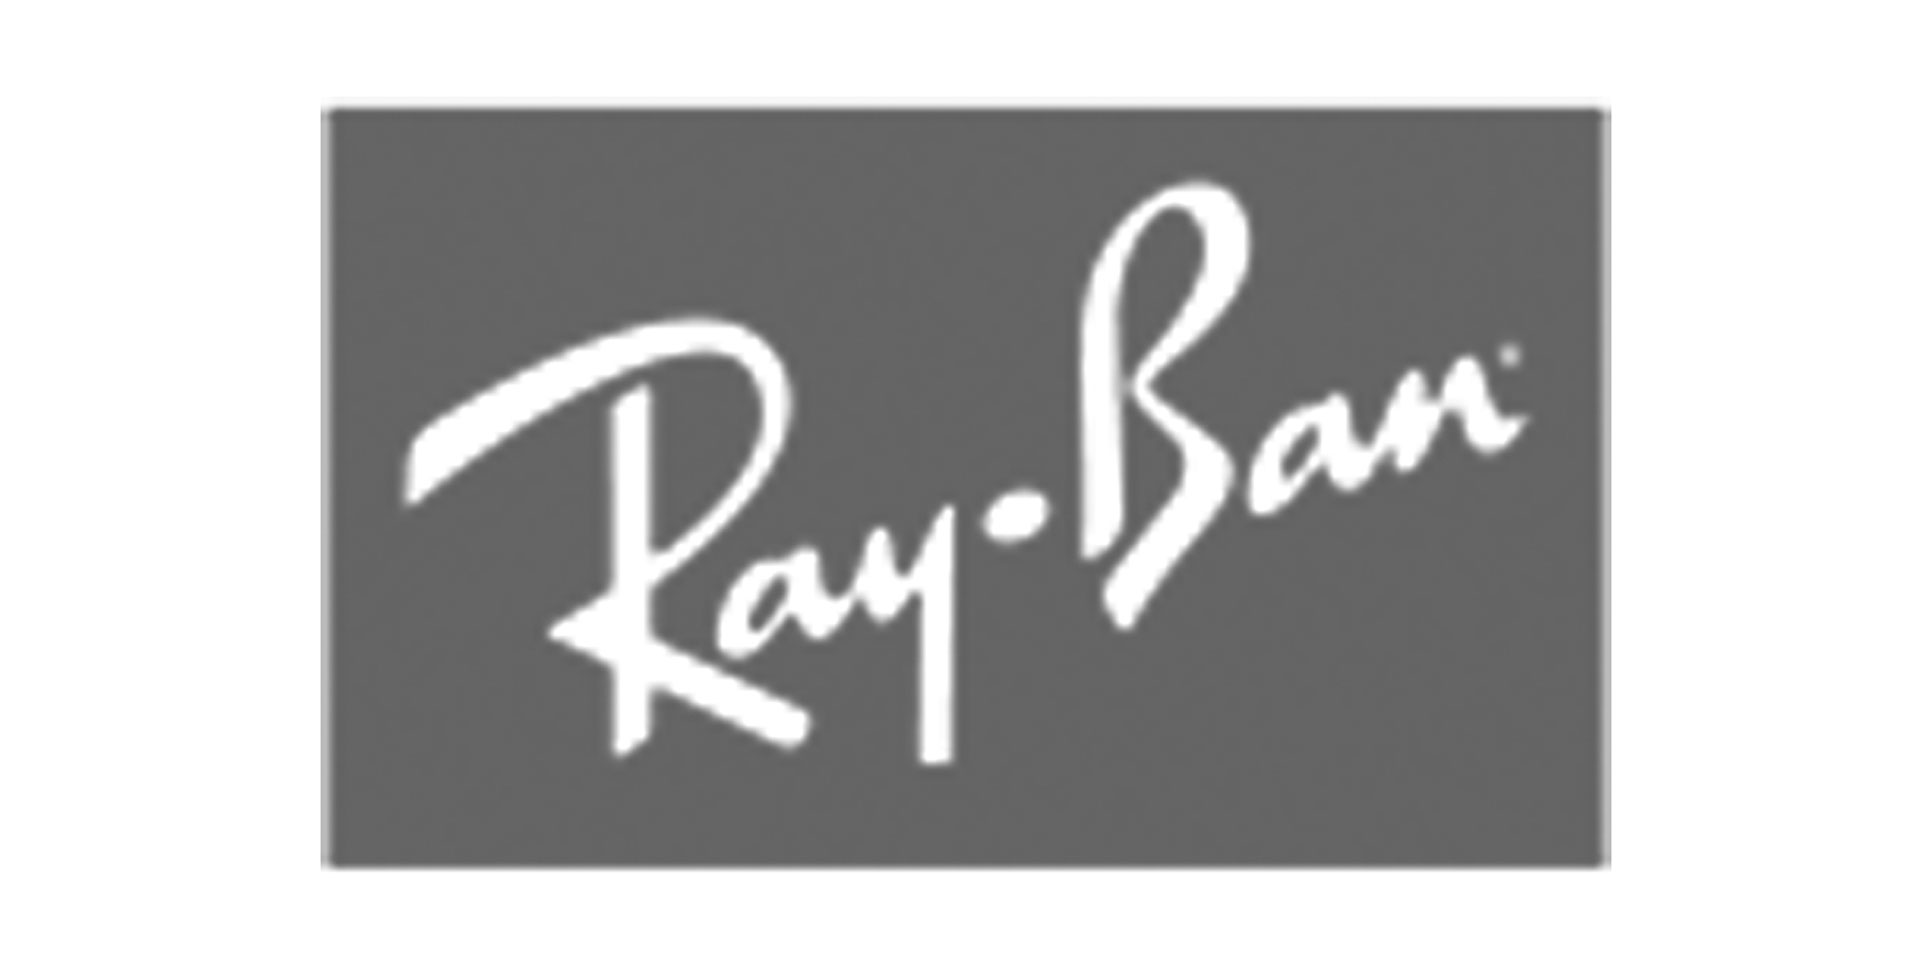 Ray-Ban RB4340 Wayfarer Ease Sunglasses | LensCrafters